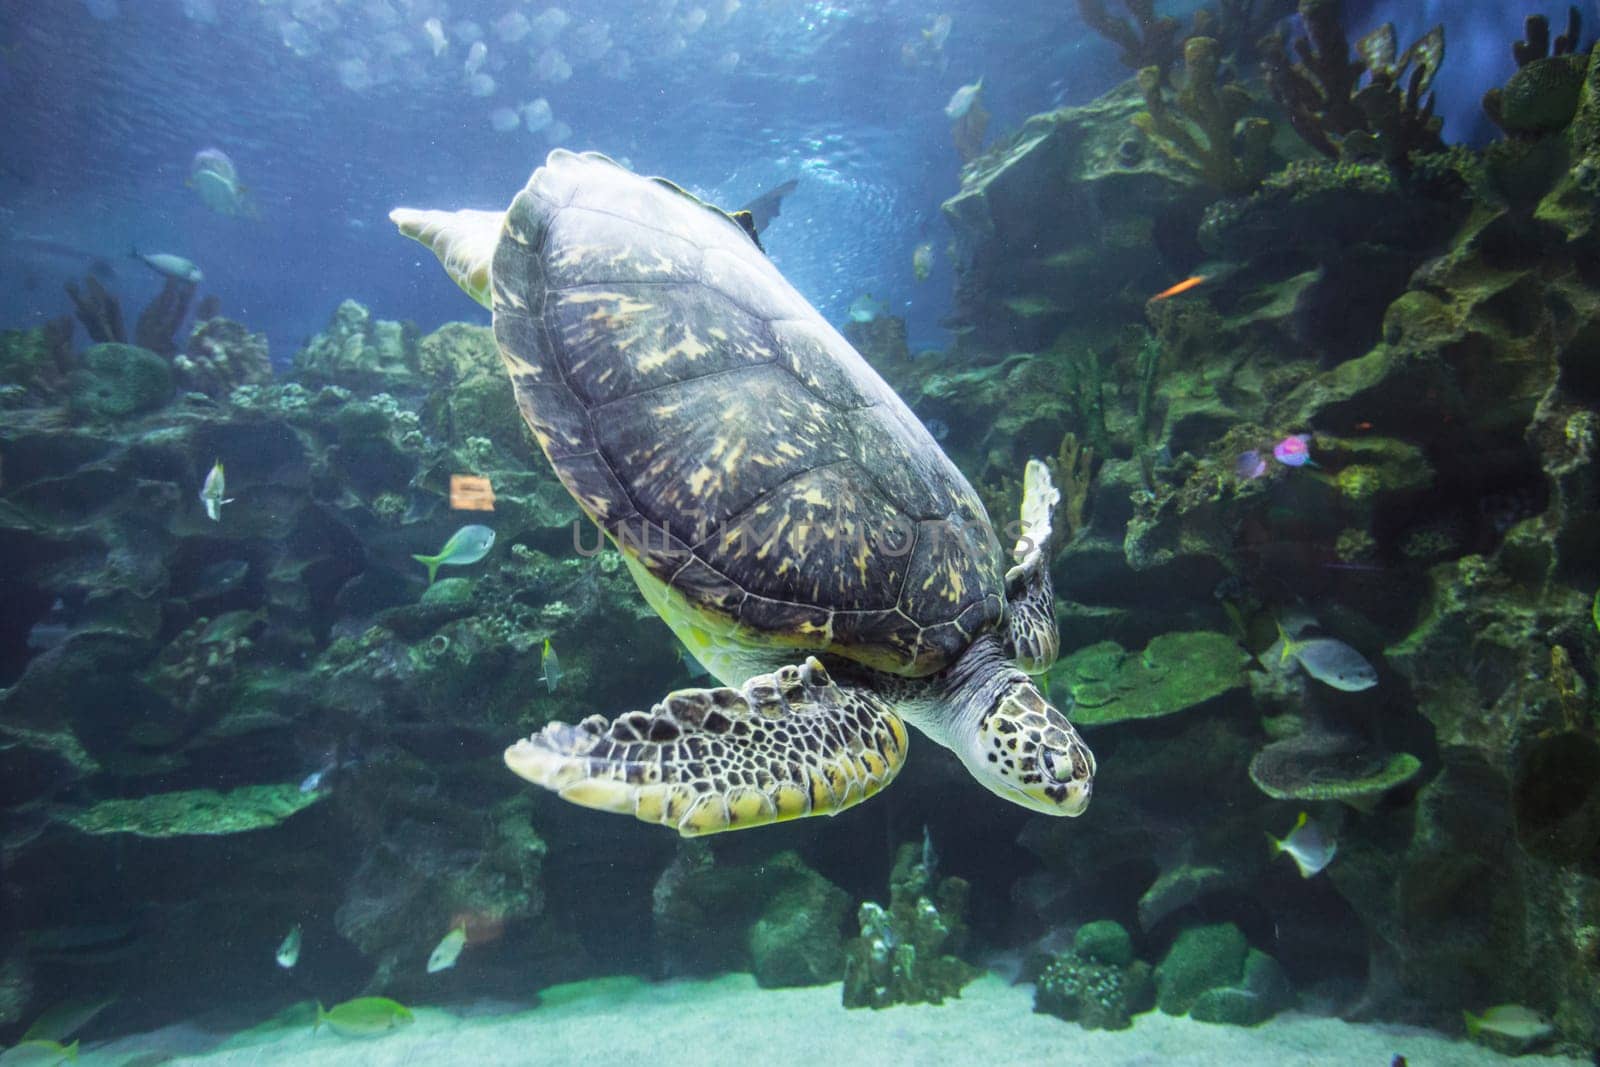 Swimming Turtle underwater by Yellowj